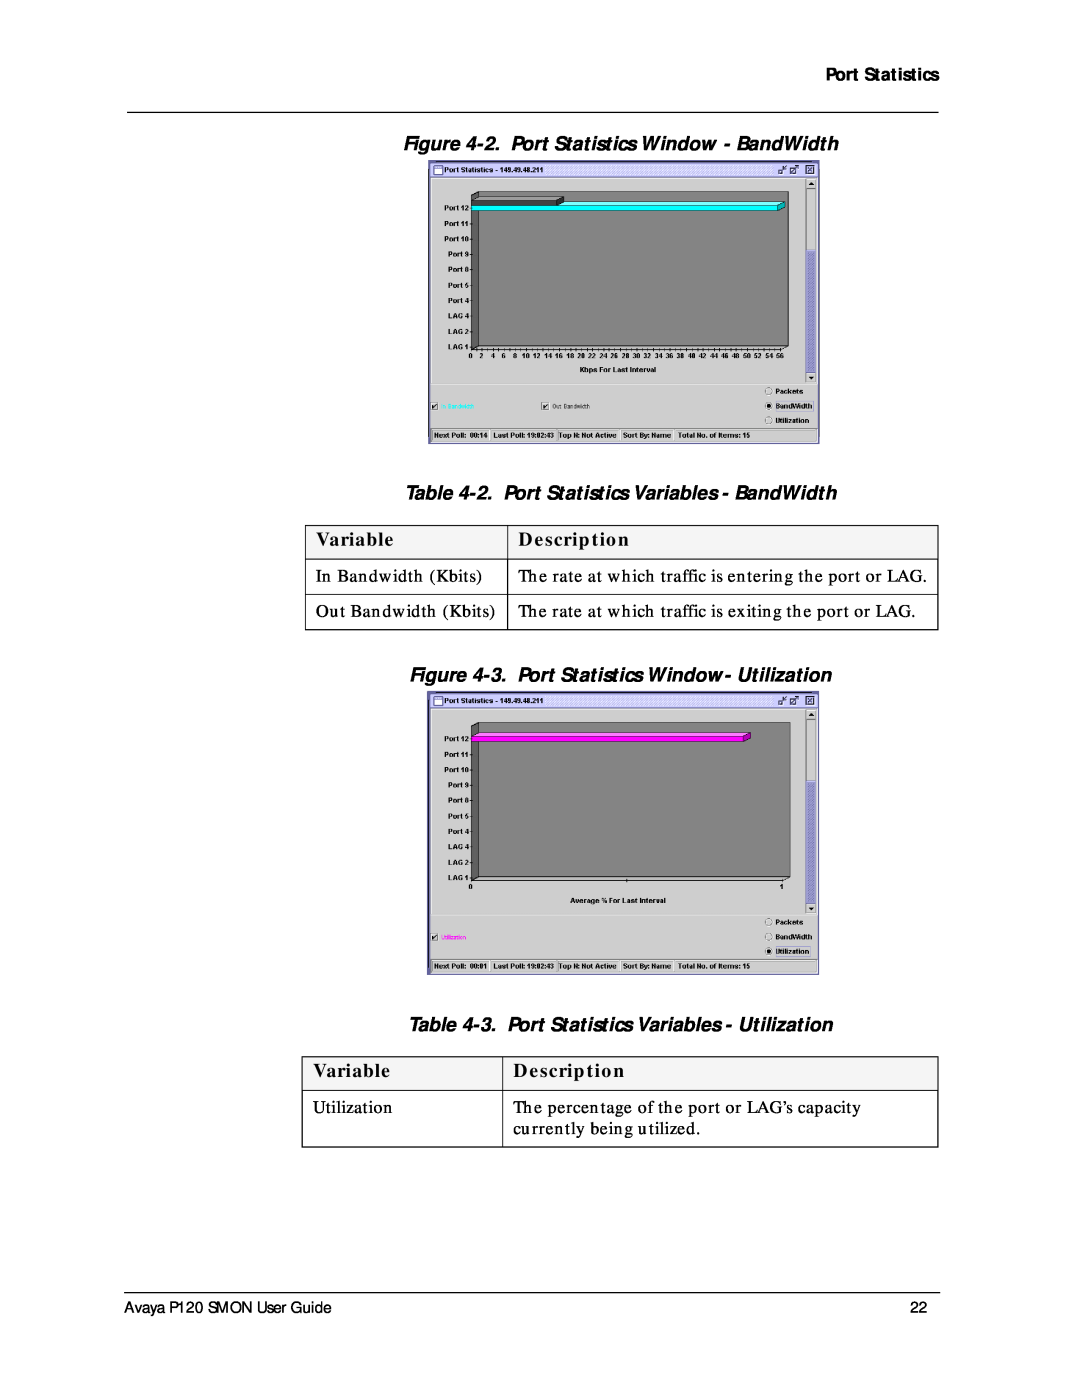 Avaya P120 SMON manual 2. Port Statistics Window - BandWidth, 2. Port Statistics Variables - BandWidth 